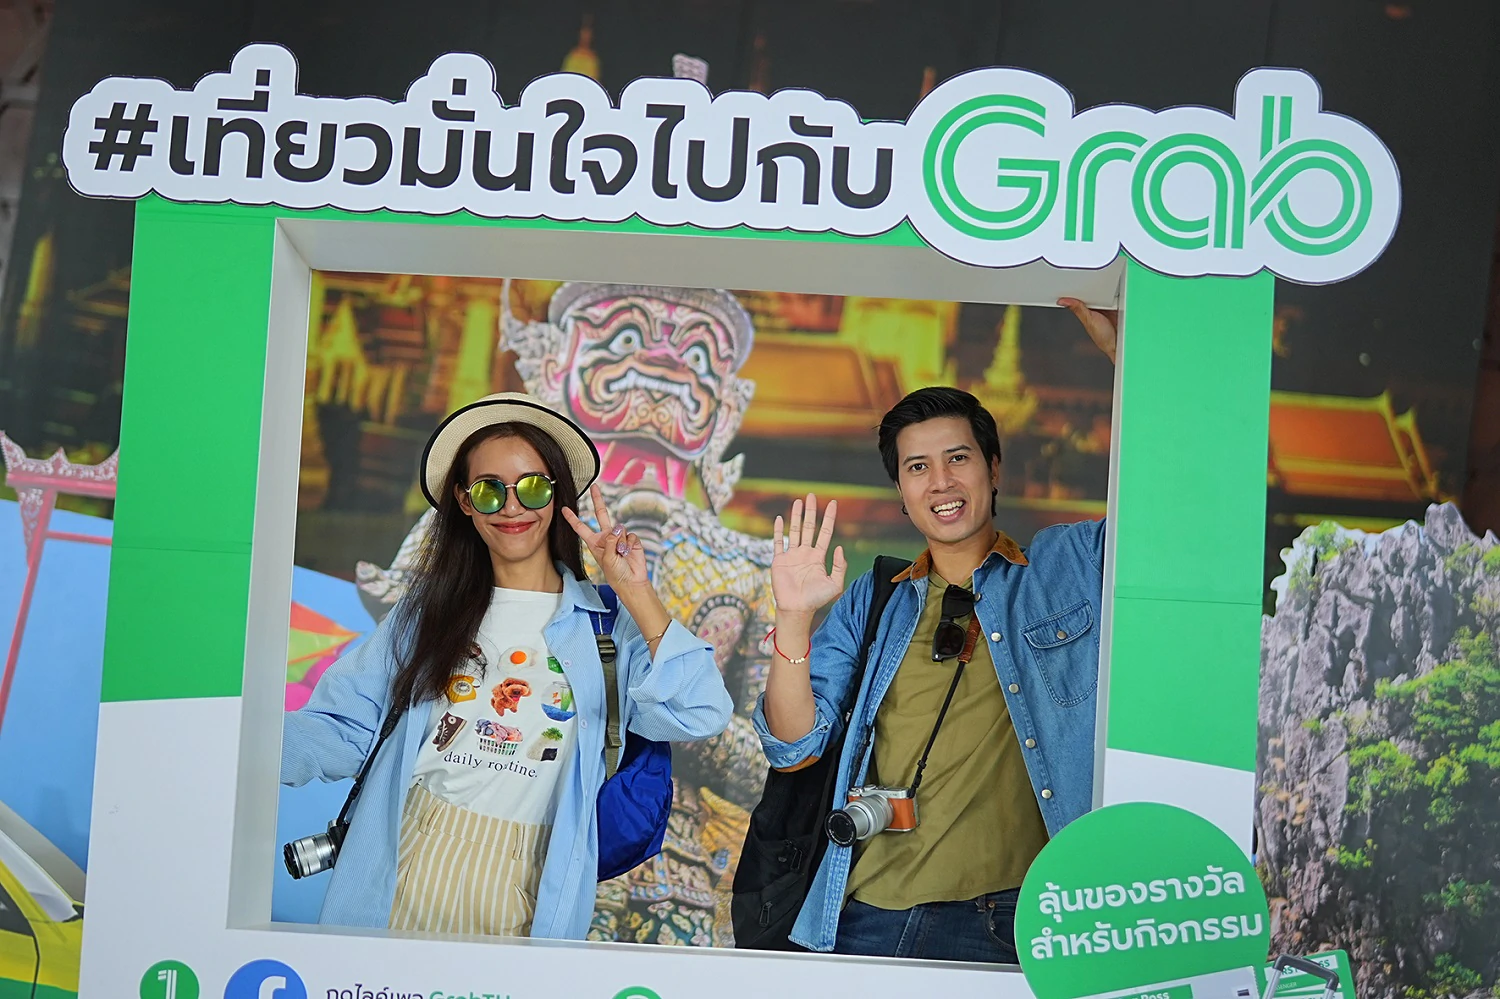 Grab 3 | grab | แกร็บ จับมือ ททท. ส่งแคมเปญ “อะเมซิ่งทั่วไทย มั่นใจไปกับ Grab” ยกระดับเสริมความมั่นใจให้นักท่องเที่ยวไทย และต่างชาติ